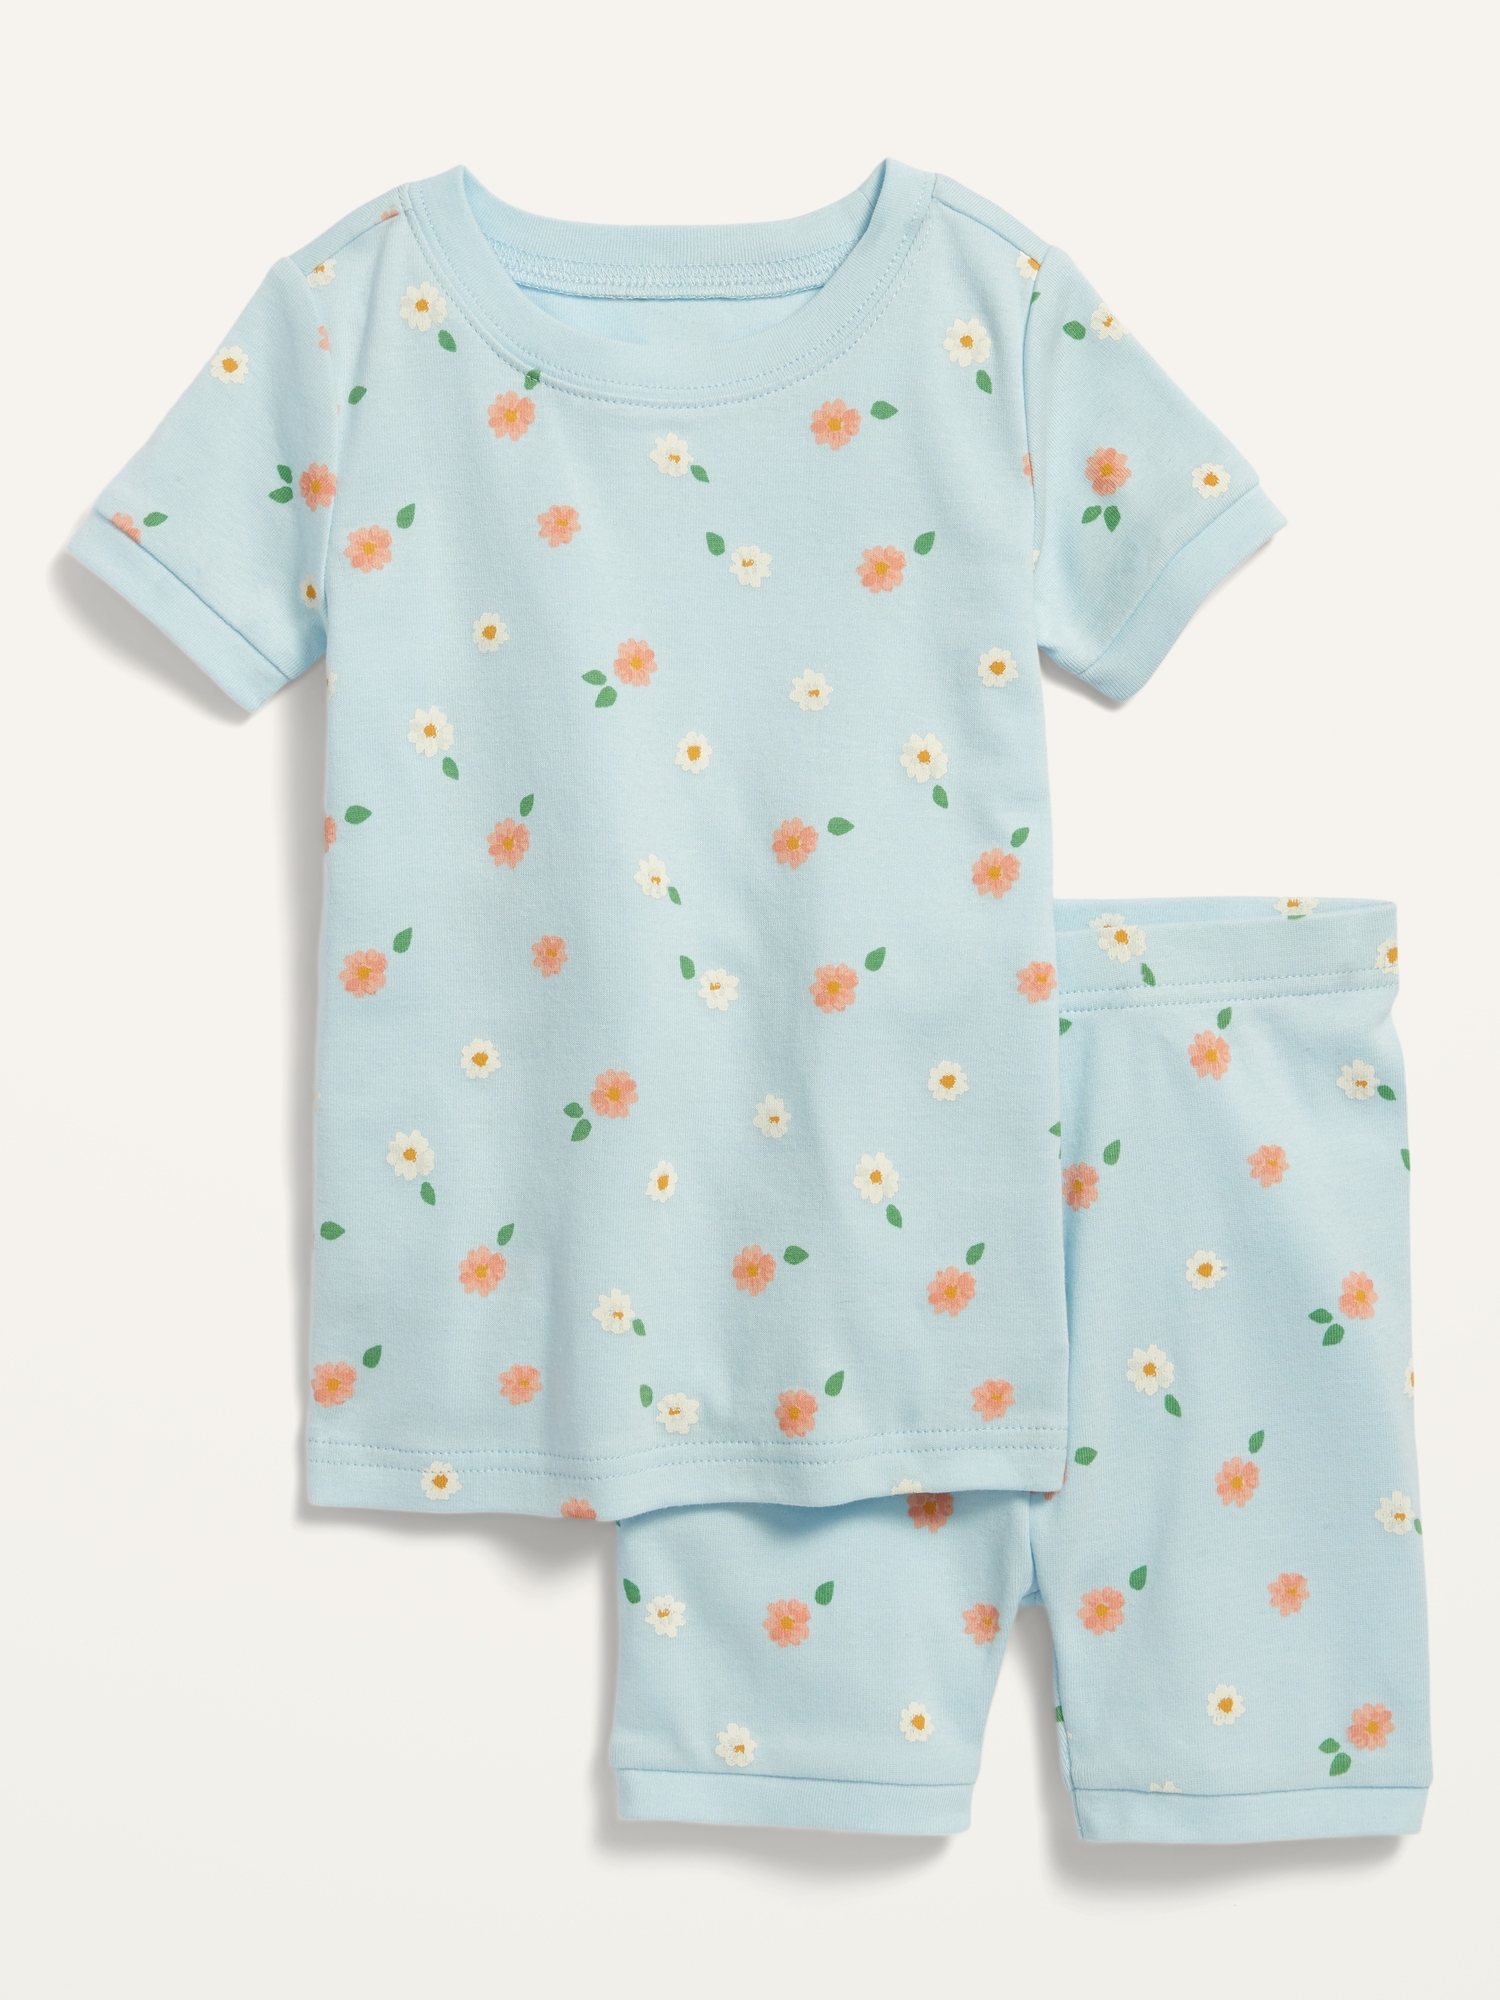 Unisex Printed Short-Sleeve Pajama Set for Toddler & Baby